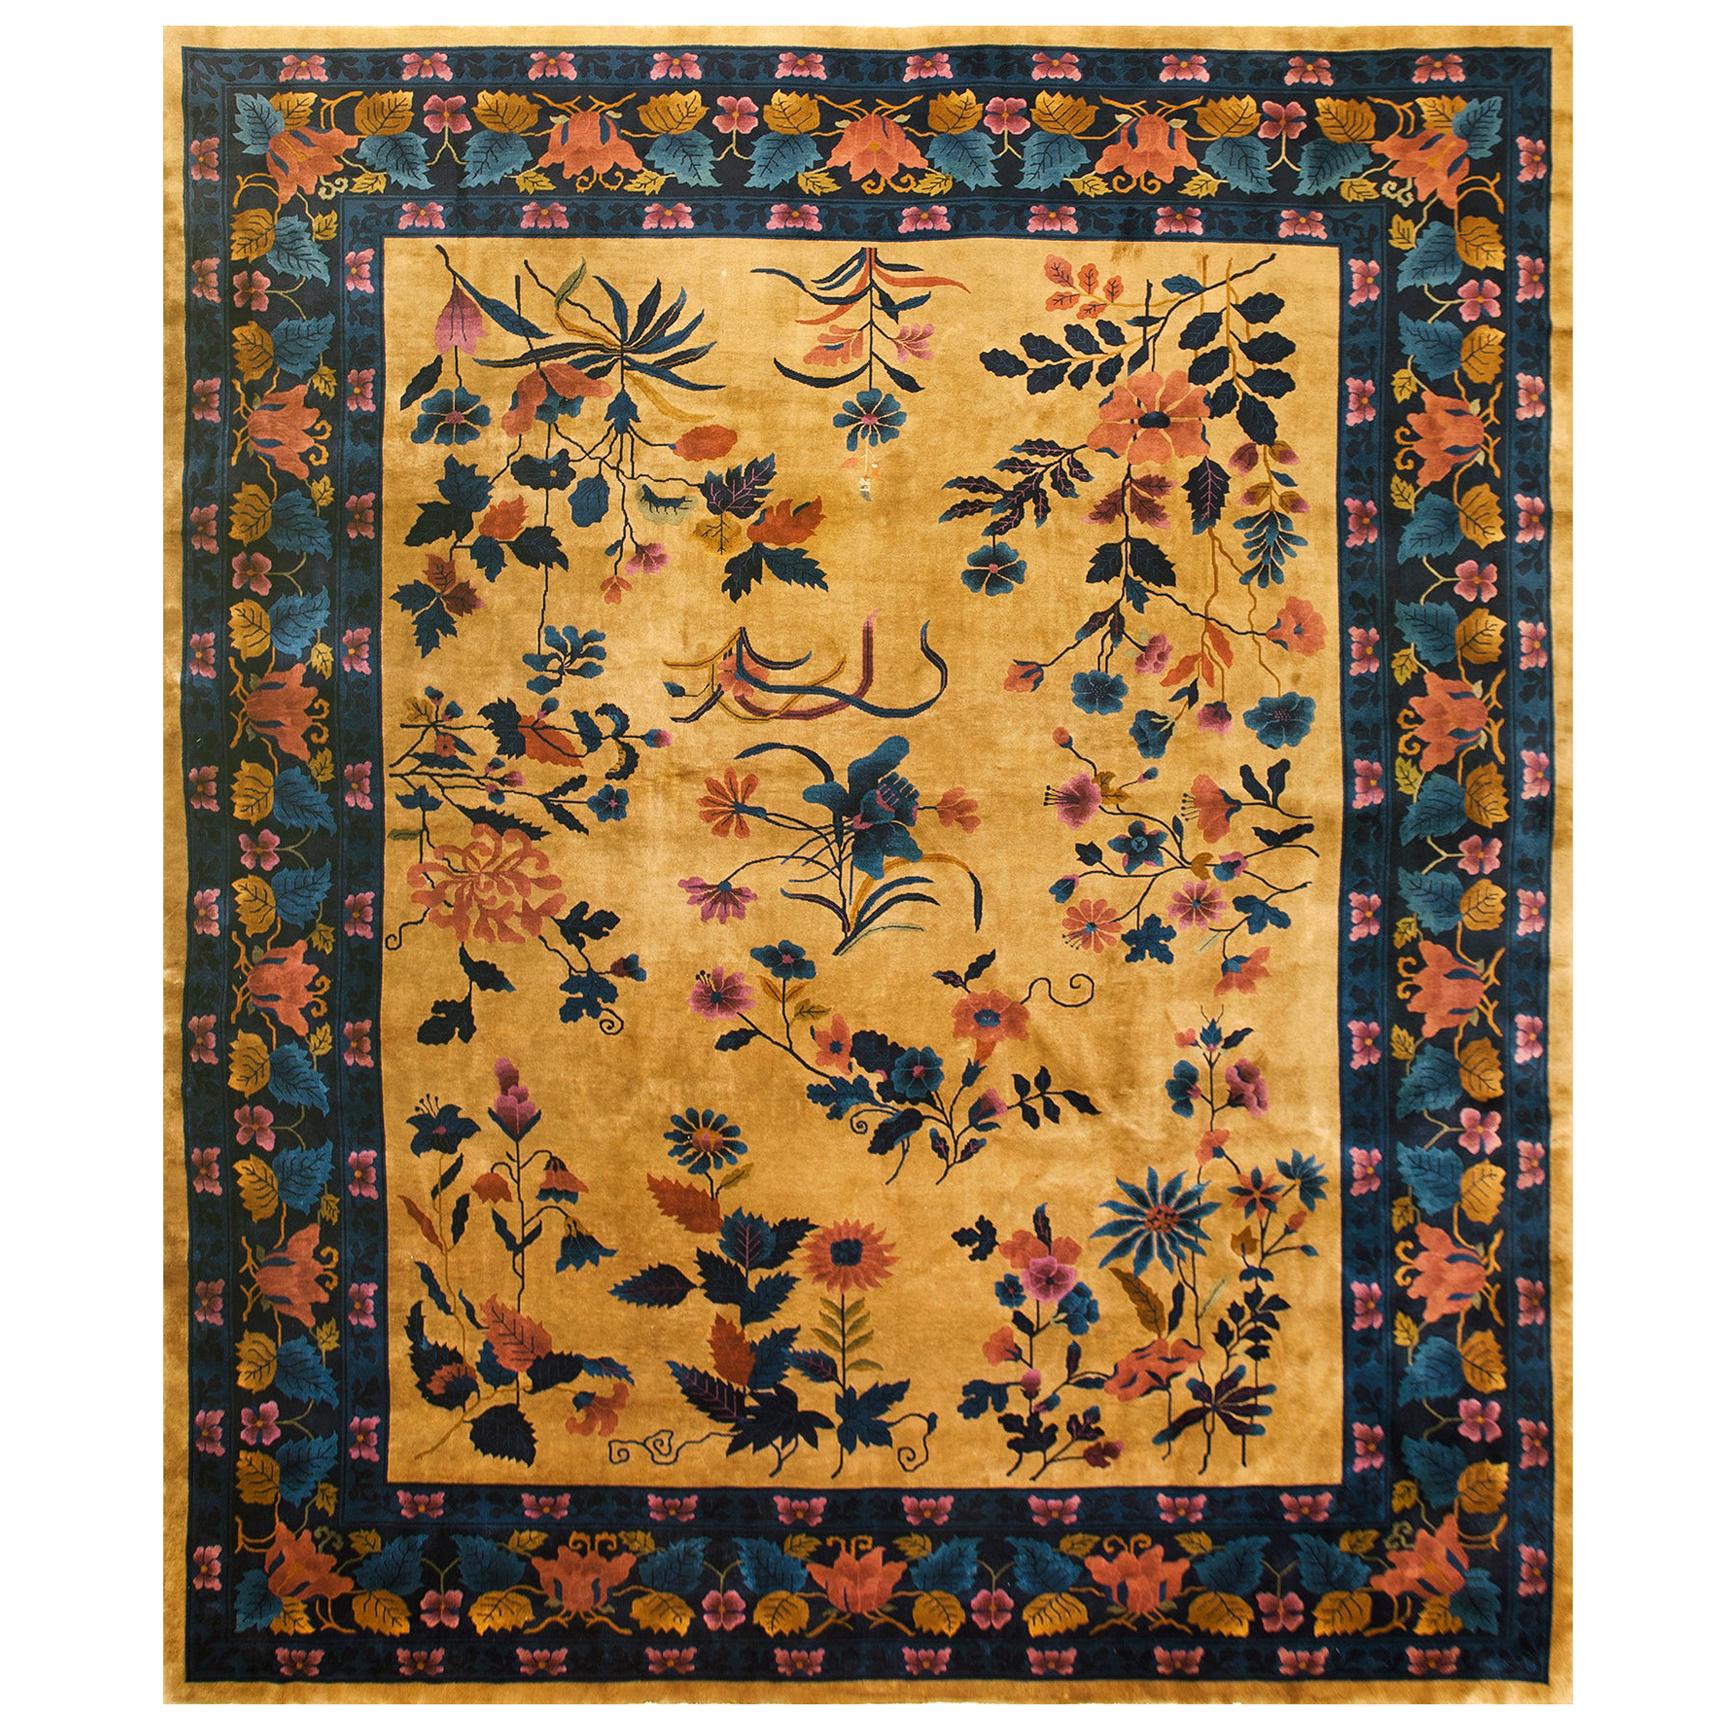 1920s Chinese Art Deco Carpet ( 13' x 15'6" - 395 x 475 cm )  For Sale